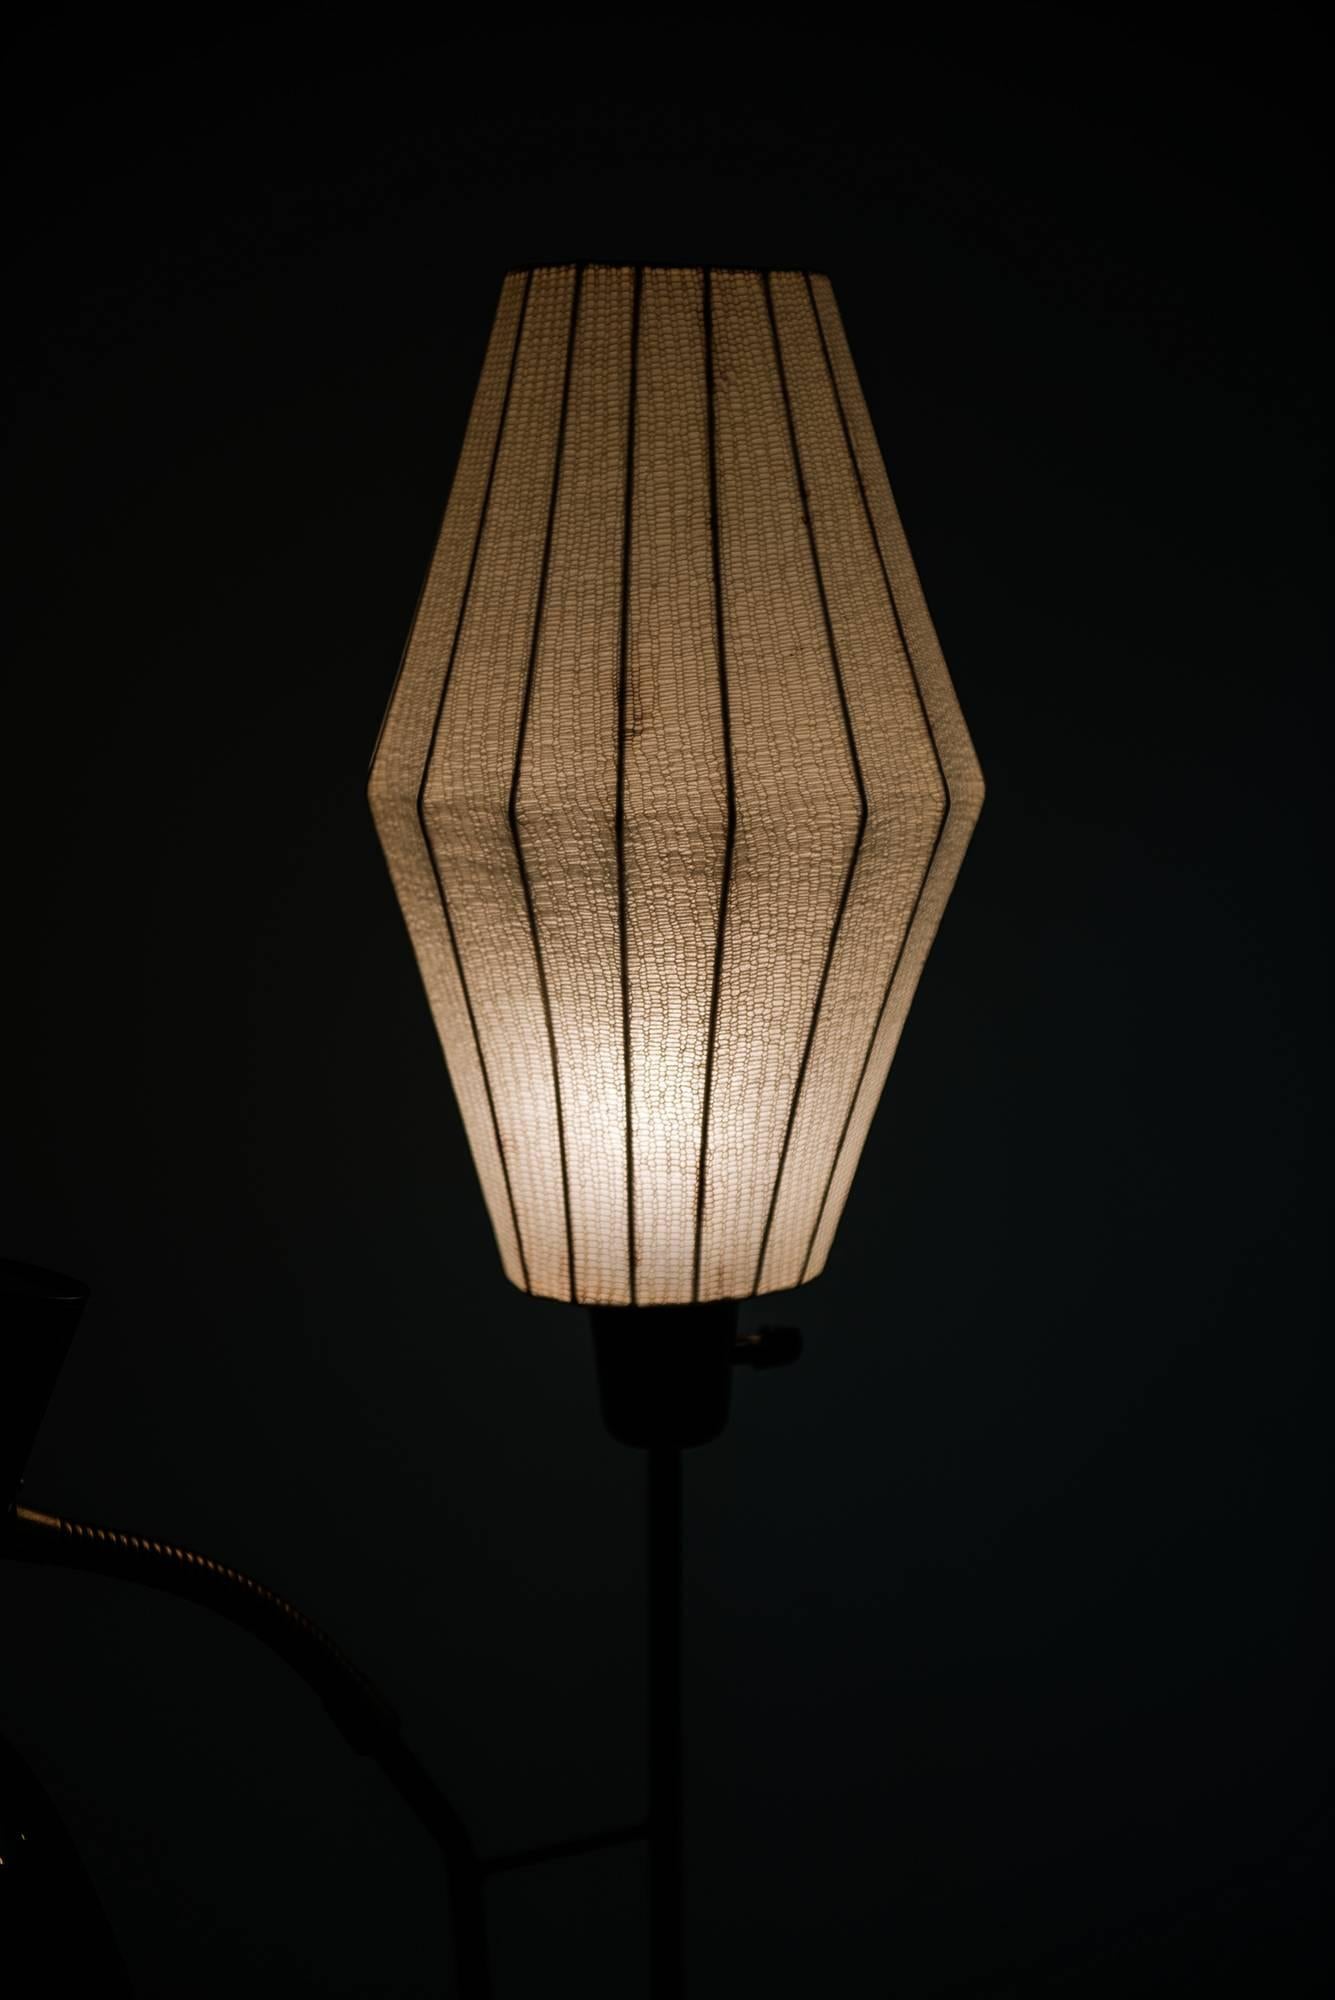 Lacquer Hans Bergström Floor Lamp by Ateljé Lyktan in Åhus, Sweden